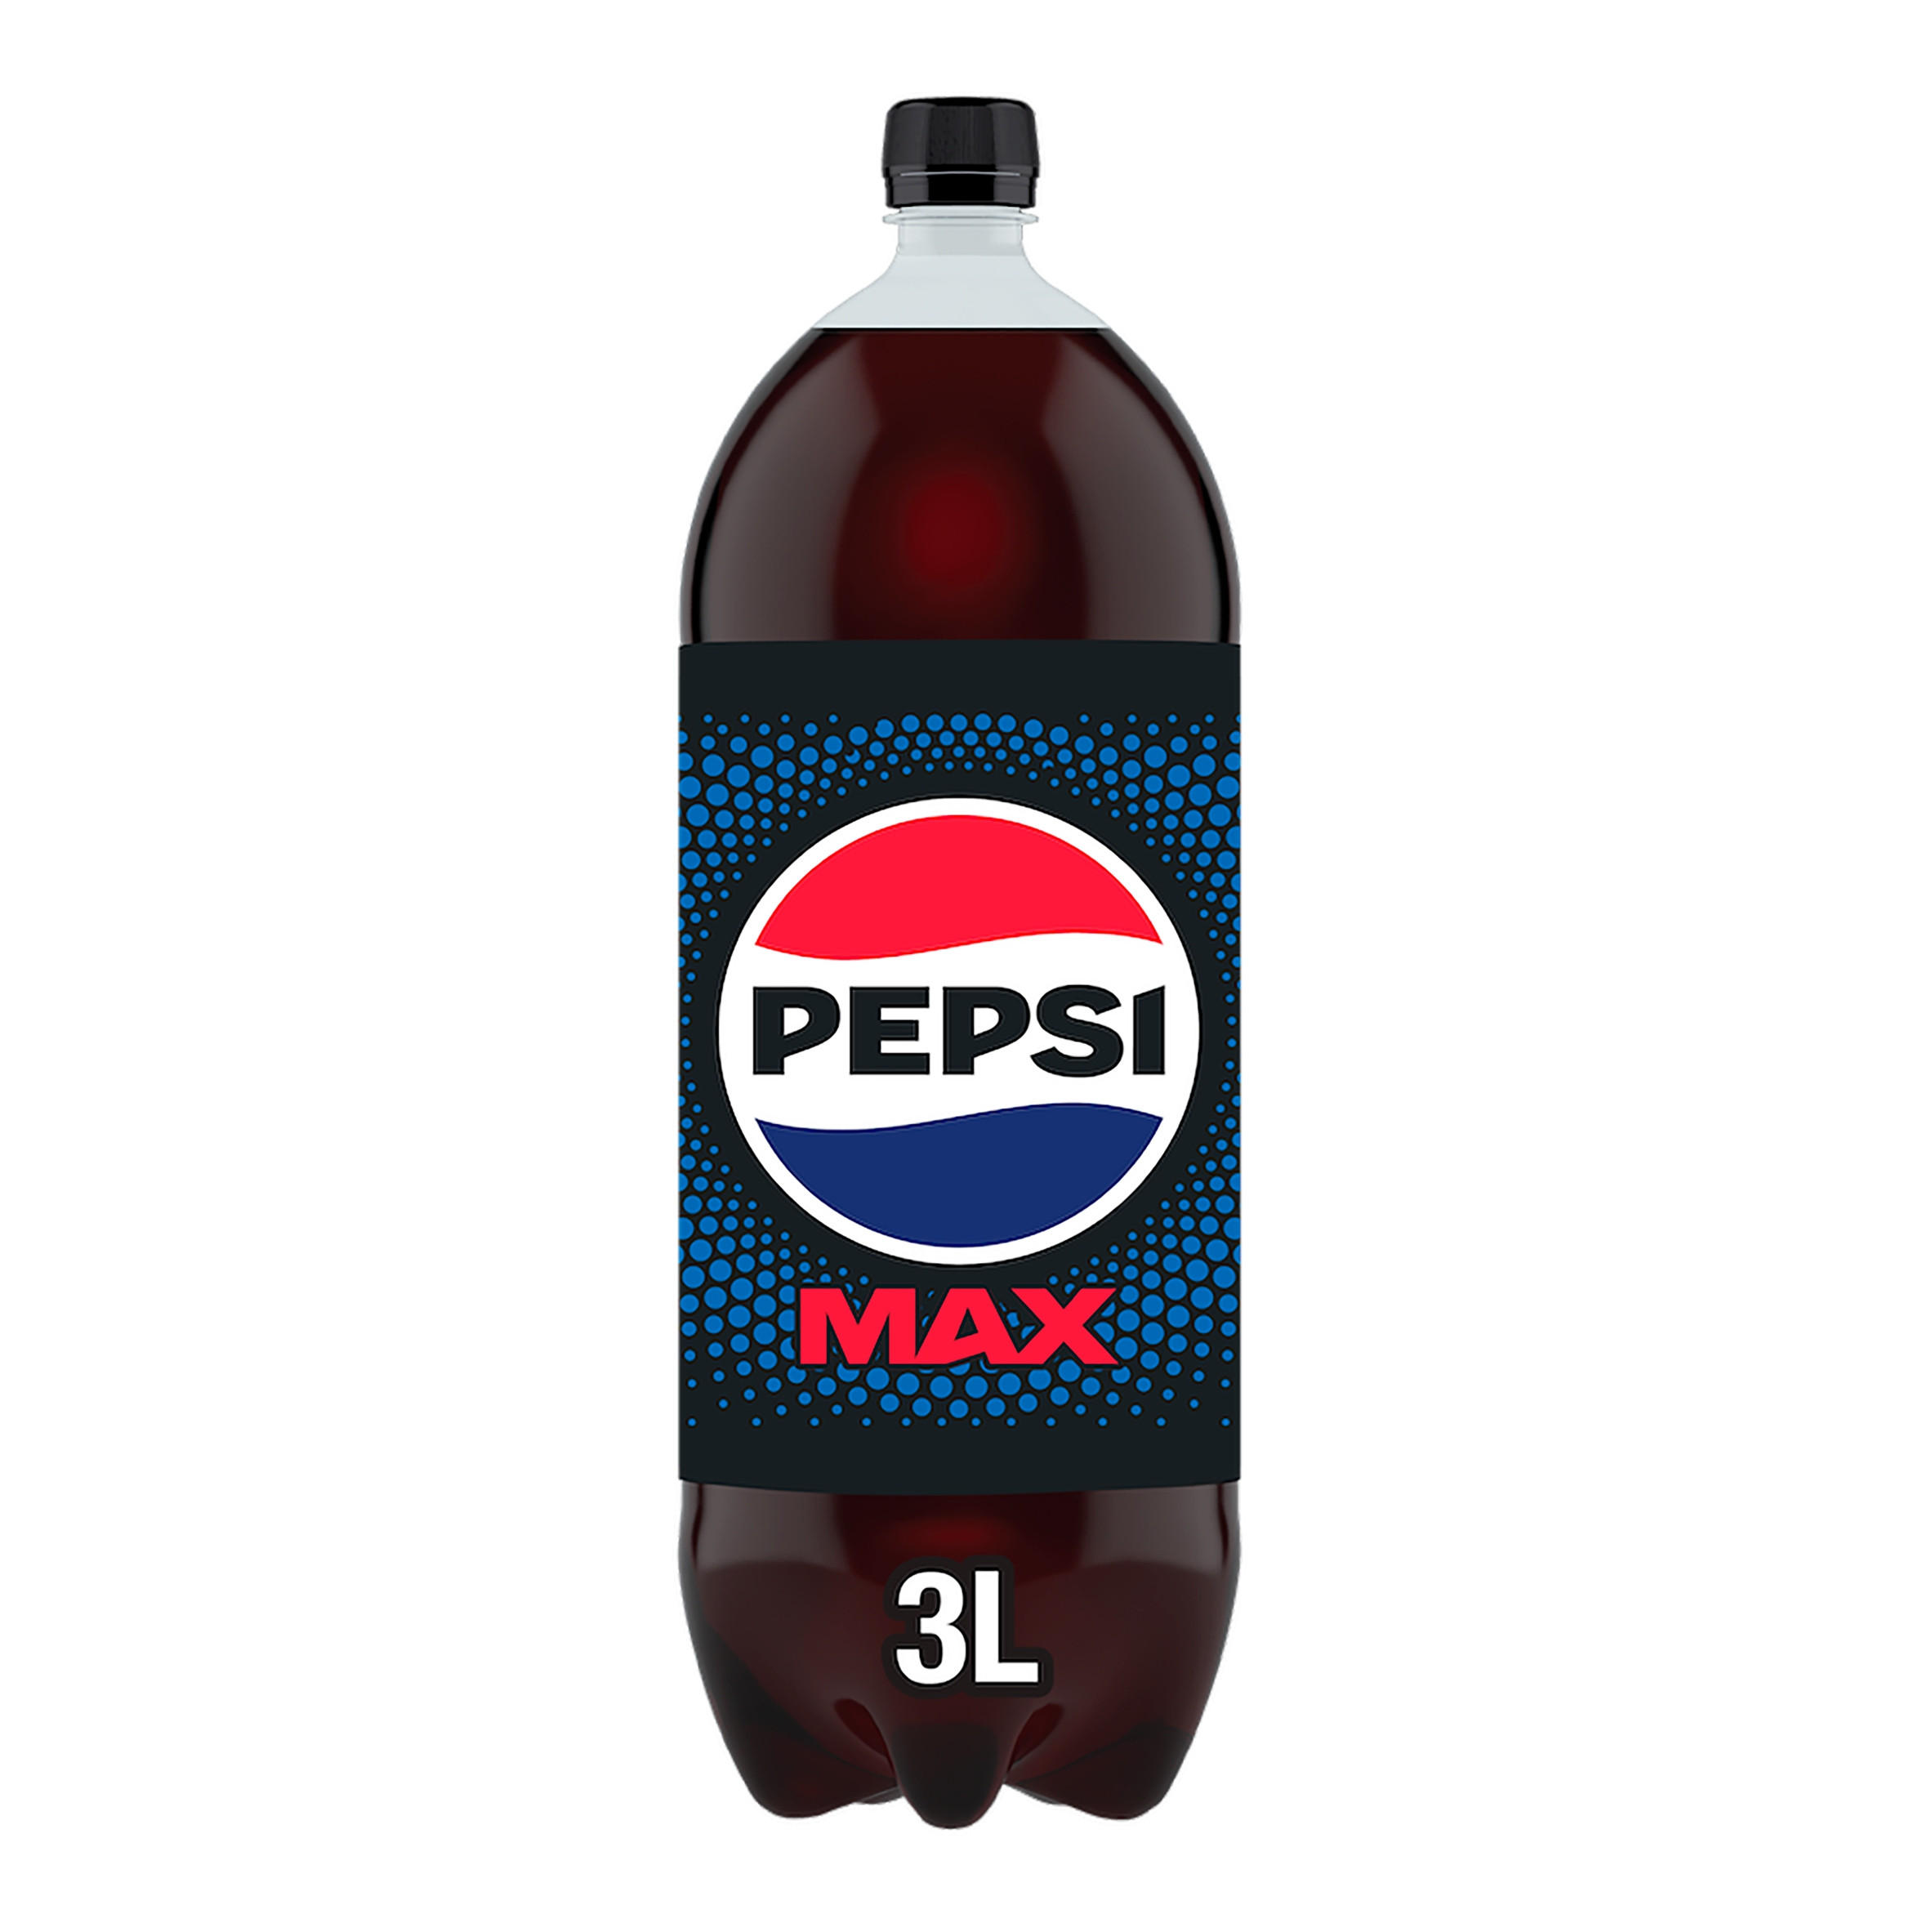 Pepsi Max No Sugar Cola Bottle 3L | Diet Drinks | Iceland Foods